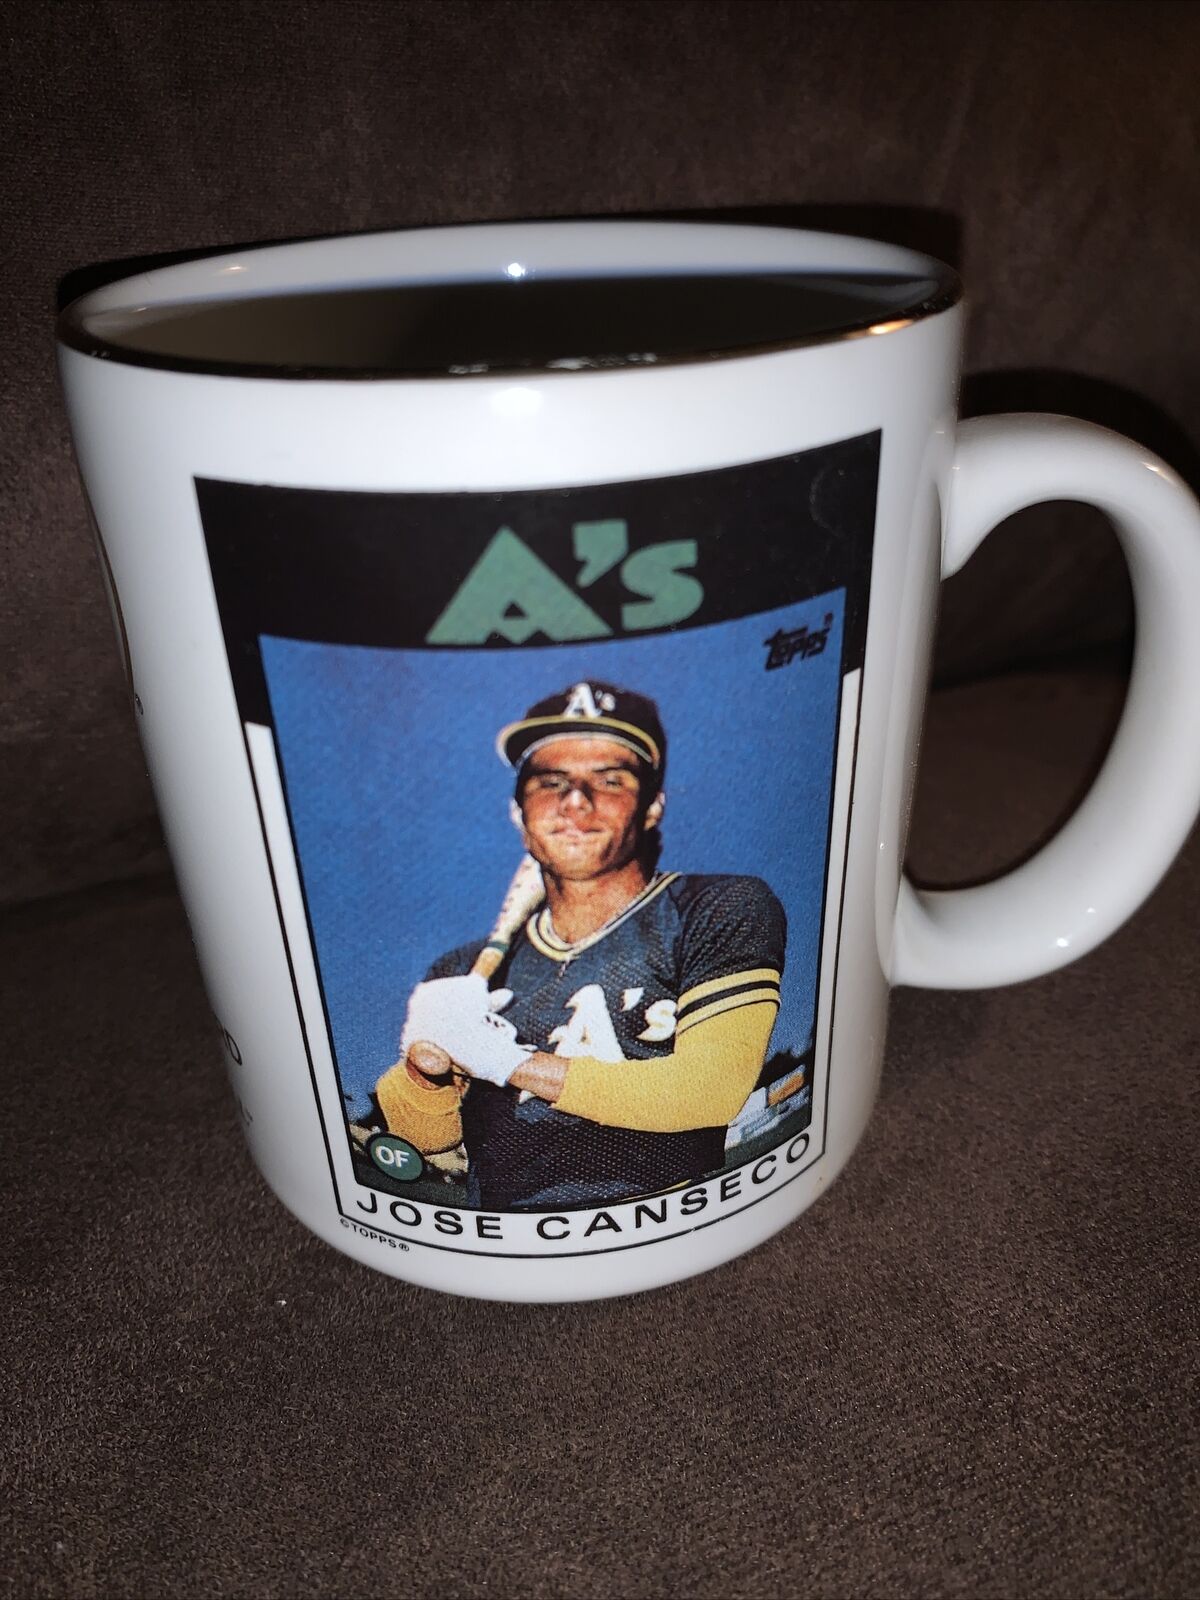 Jose Canseco Topps Rookie Card Sports Nostalgia Coffee Mug With Original Box